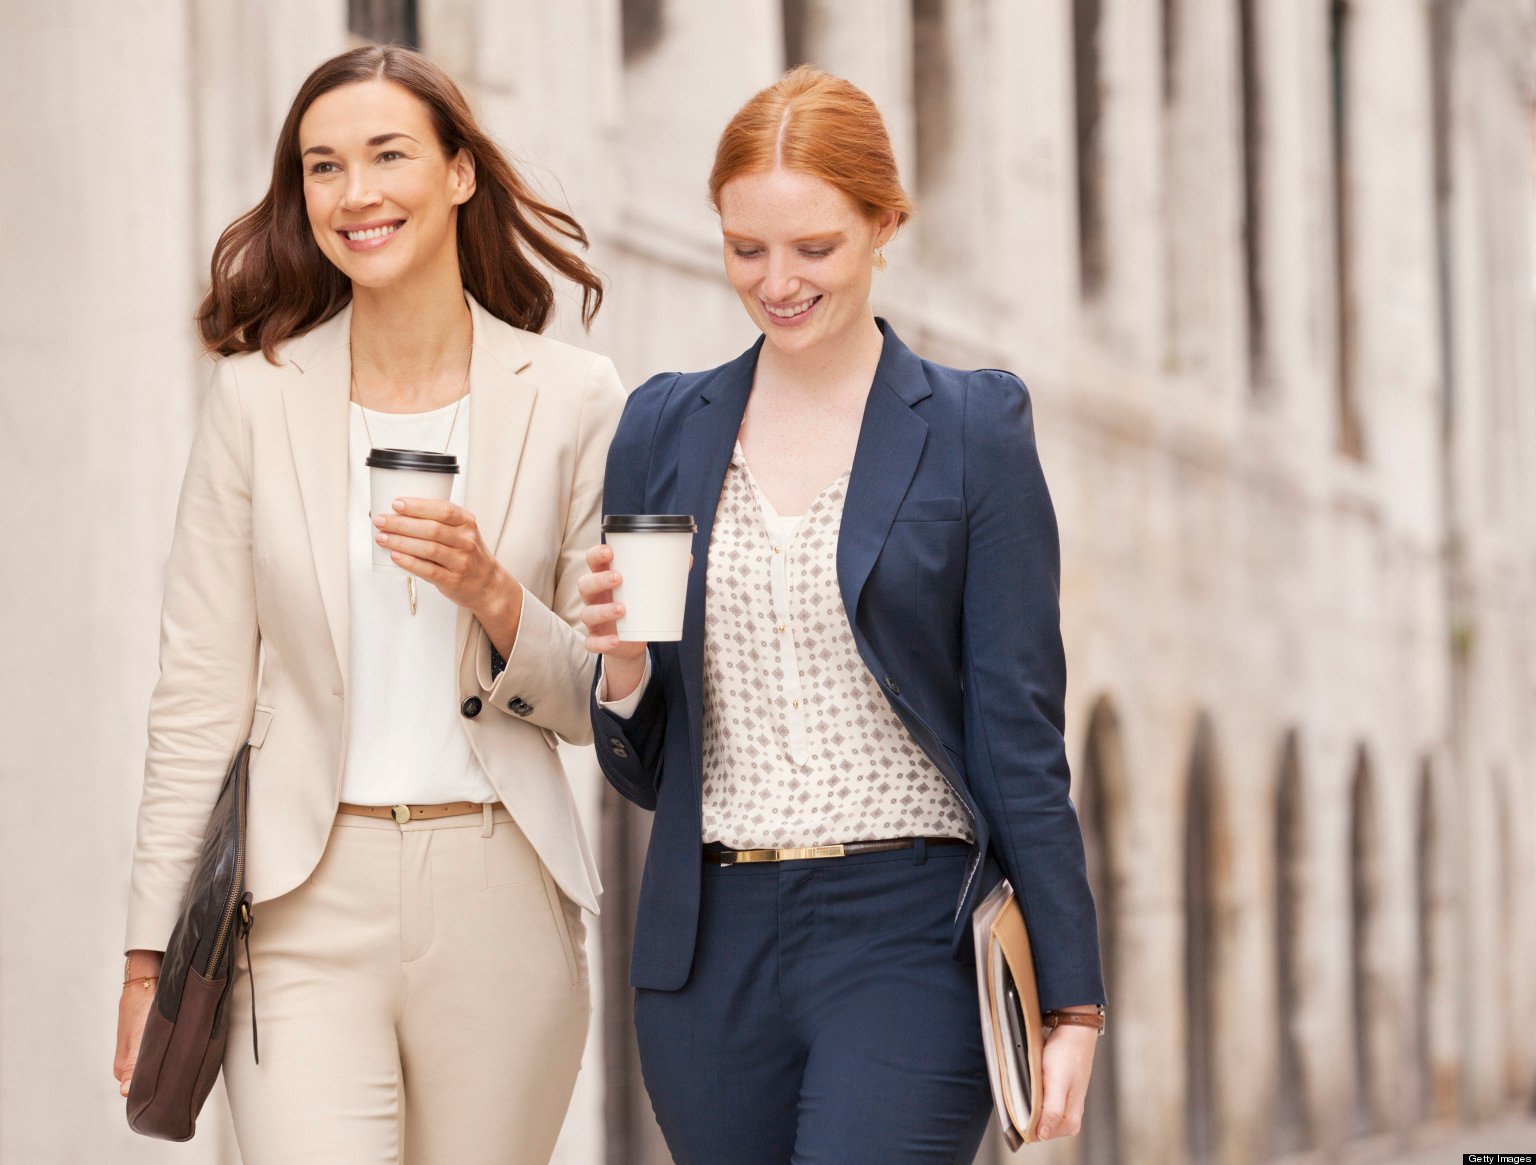 Smiling businesswomen walking with coffee